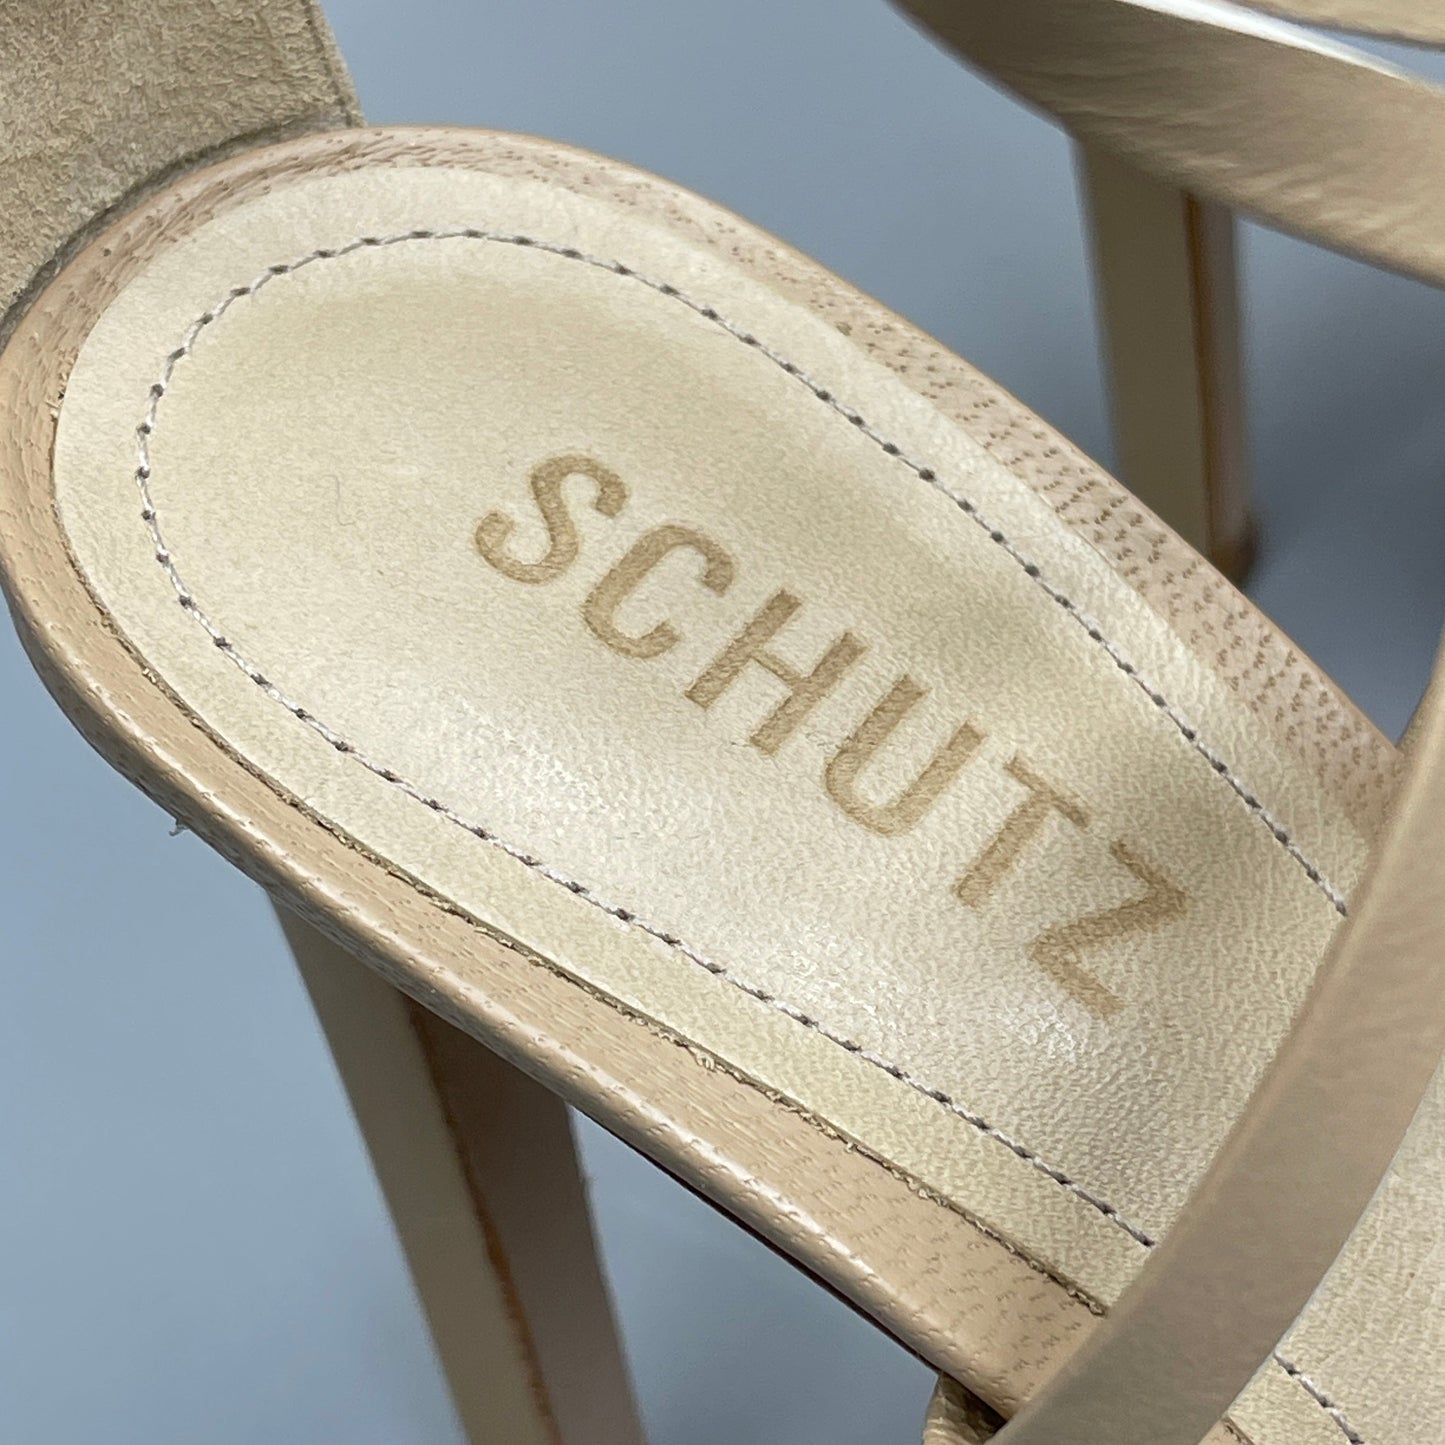 SCHUTZ Bryce Ankle Tie Women's Leather High Heel Sandal Light Nude Sz 8.5B (New)